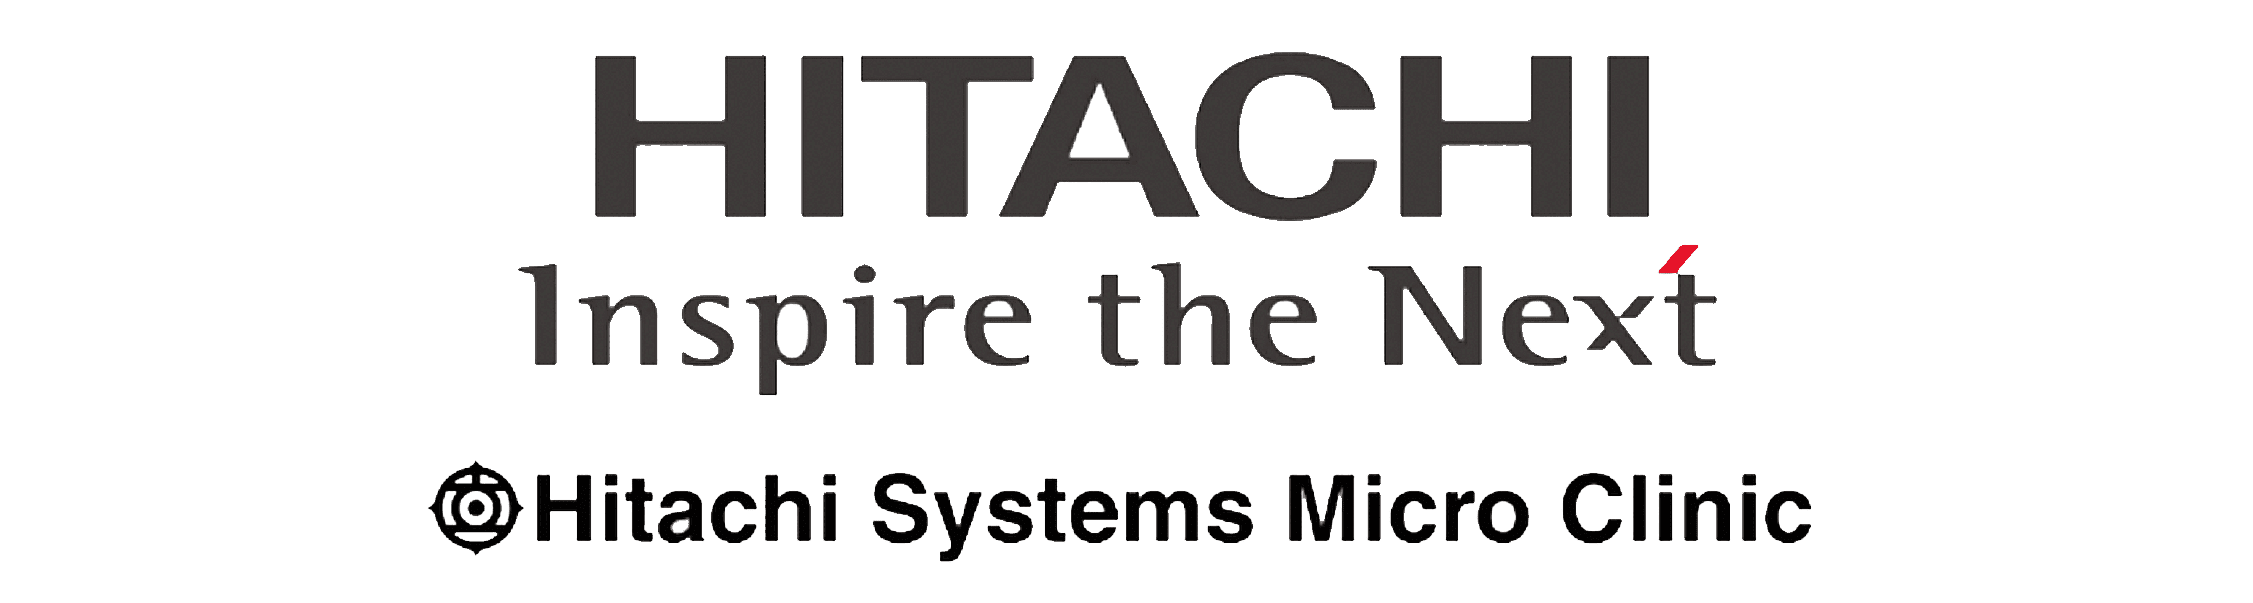 resume parsing technology for Hitachi